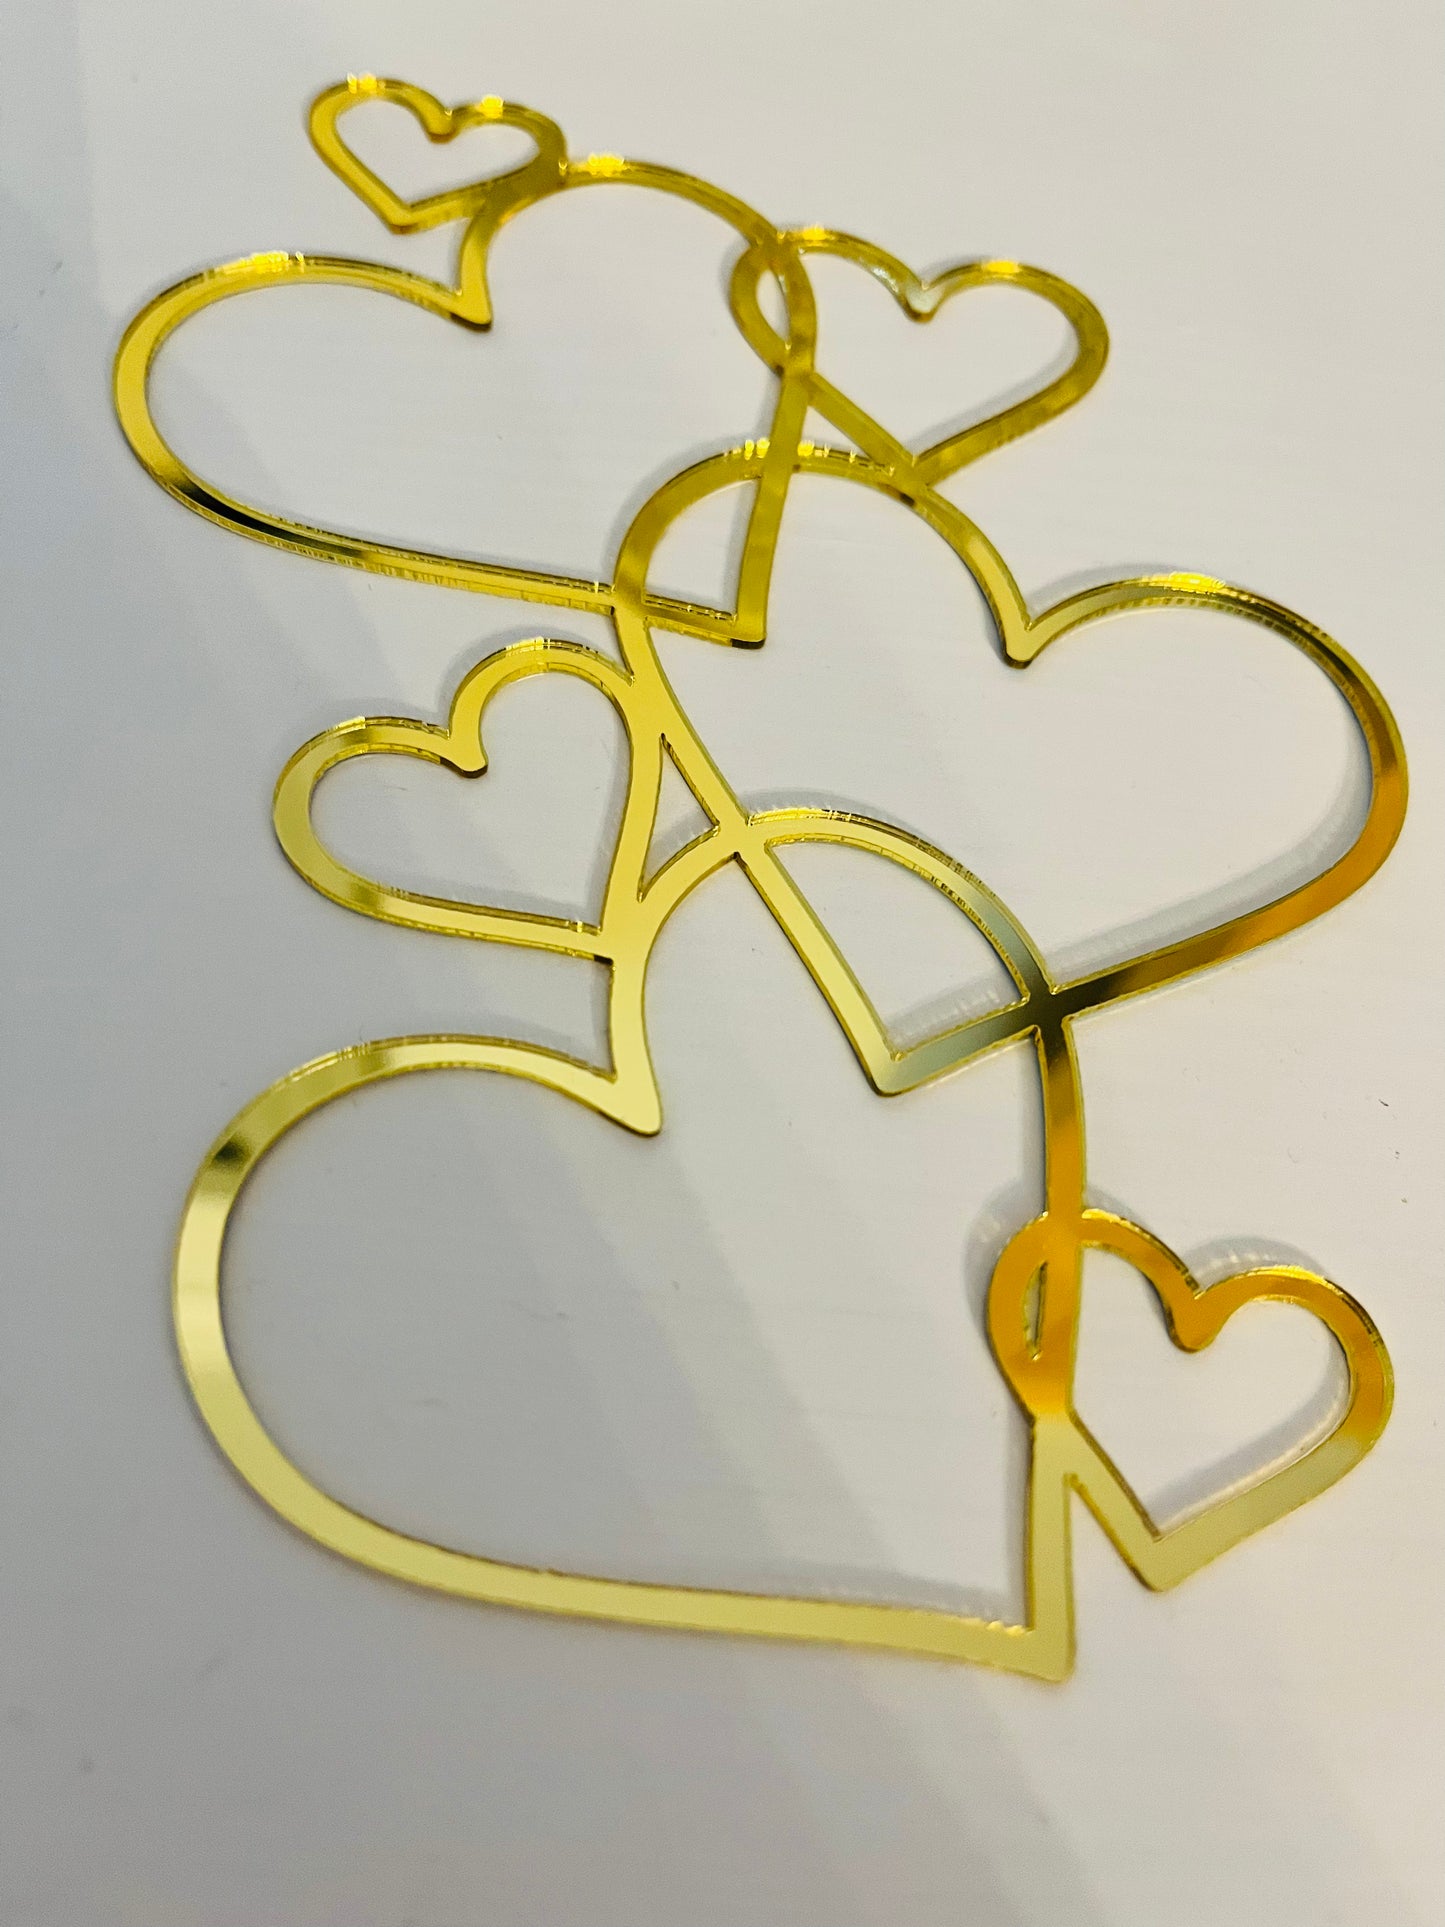 Gold Heart Acrylic Cake Topper